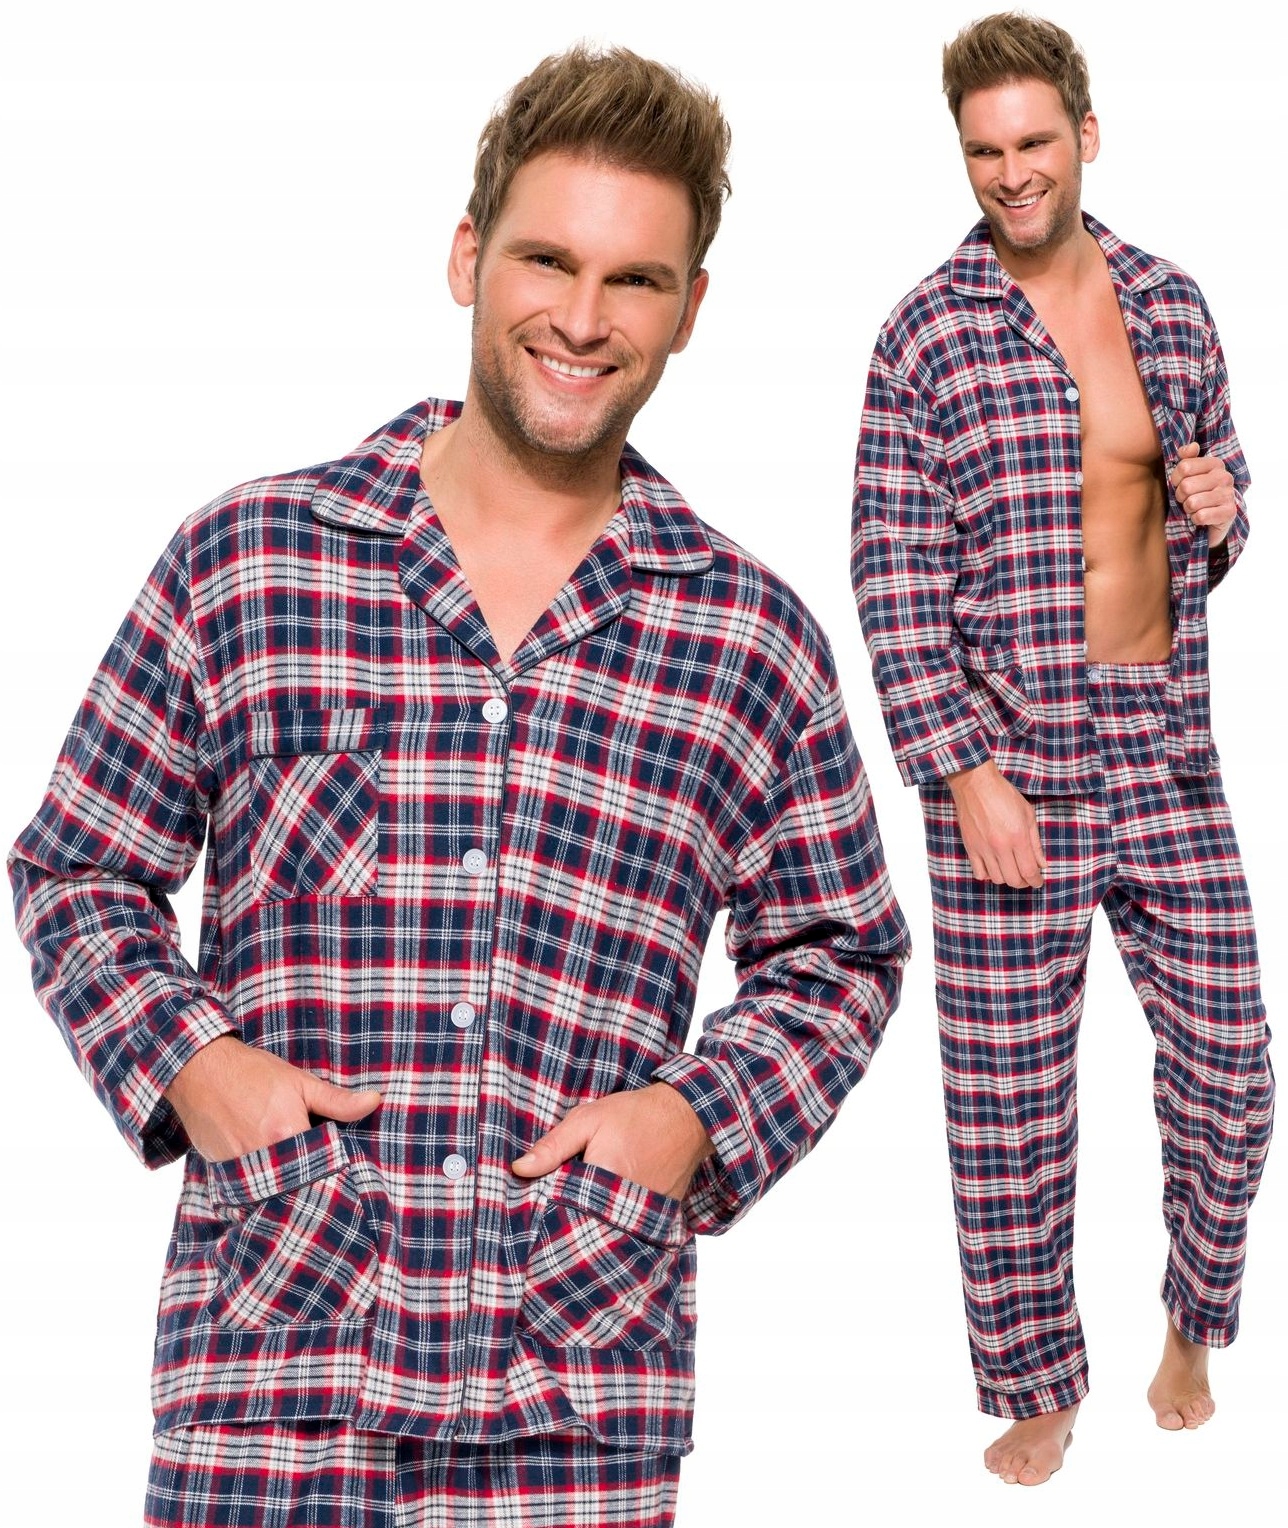 Фланелевые мужские пижамы. Пижама мужская. Пижама мужская фланелевая. Мужчина в пижаме. Пижама мужская хлопок.